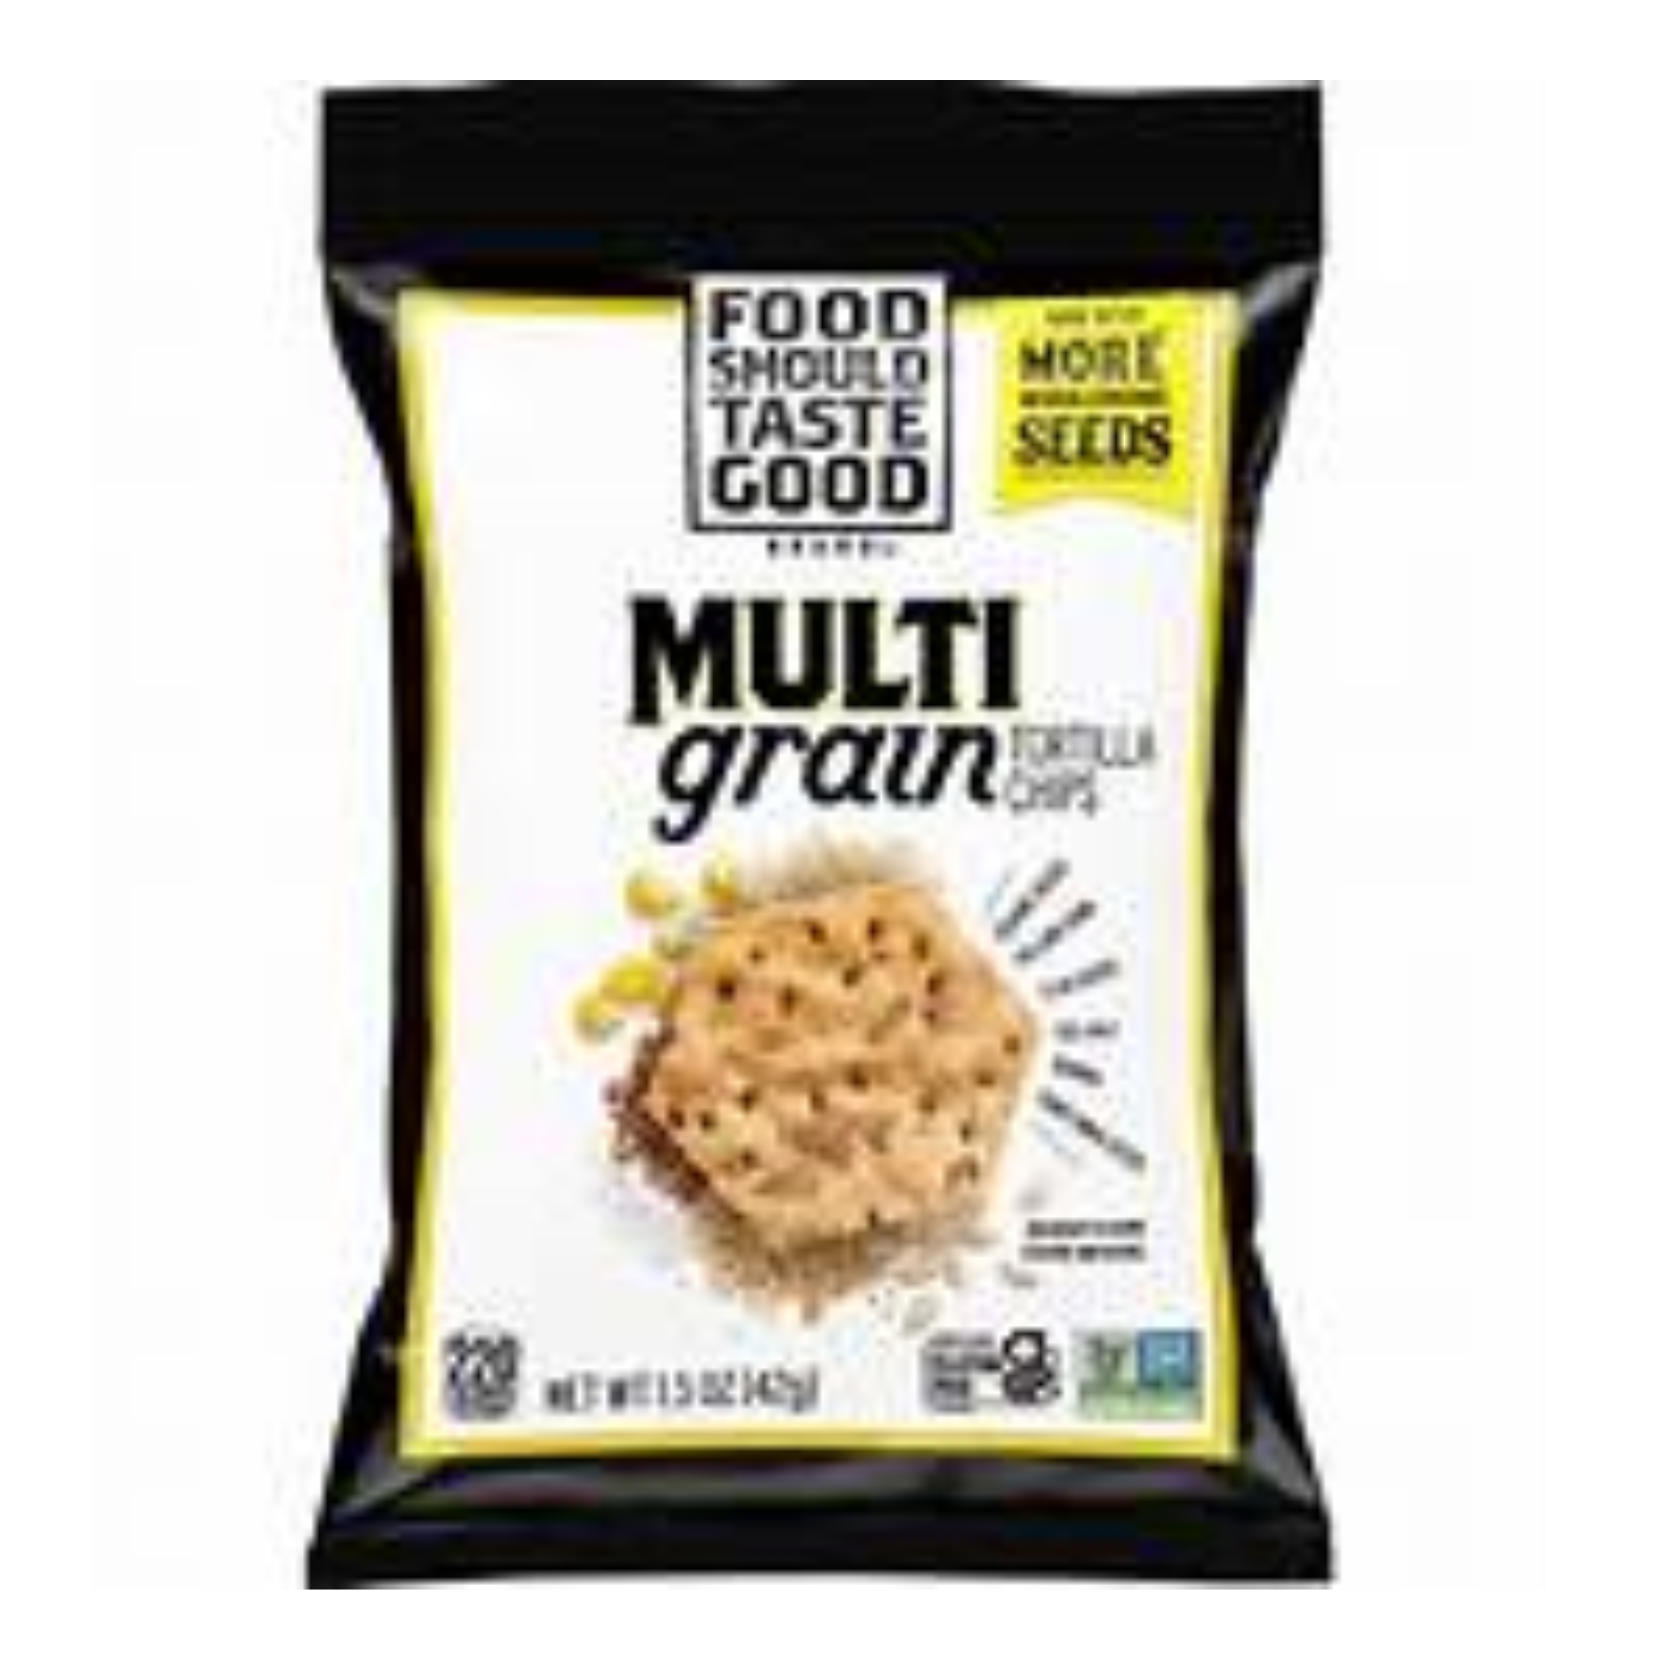 Food Should Taste Good Multigrain Chips 816g